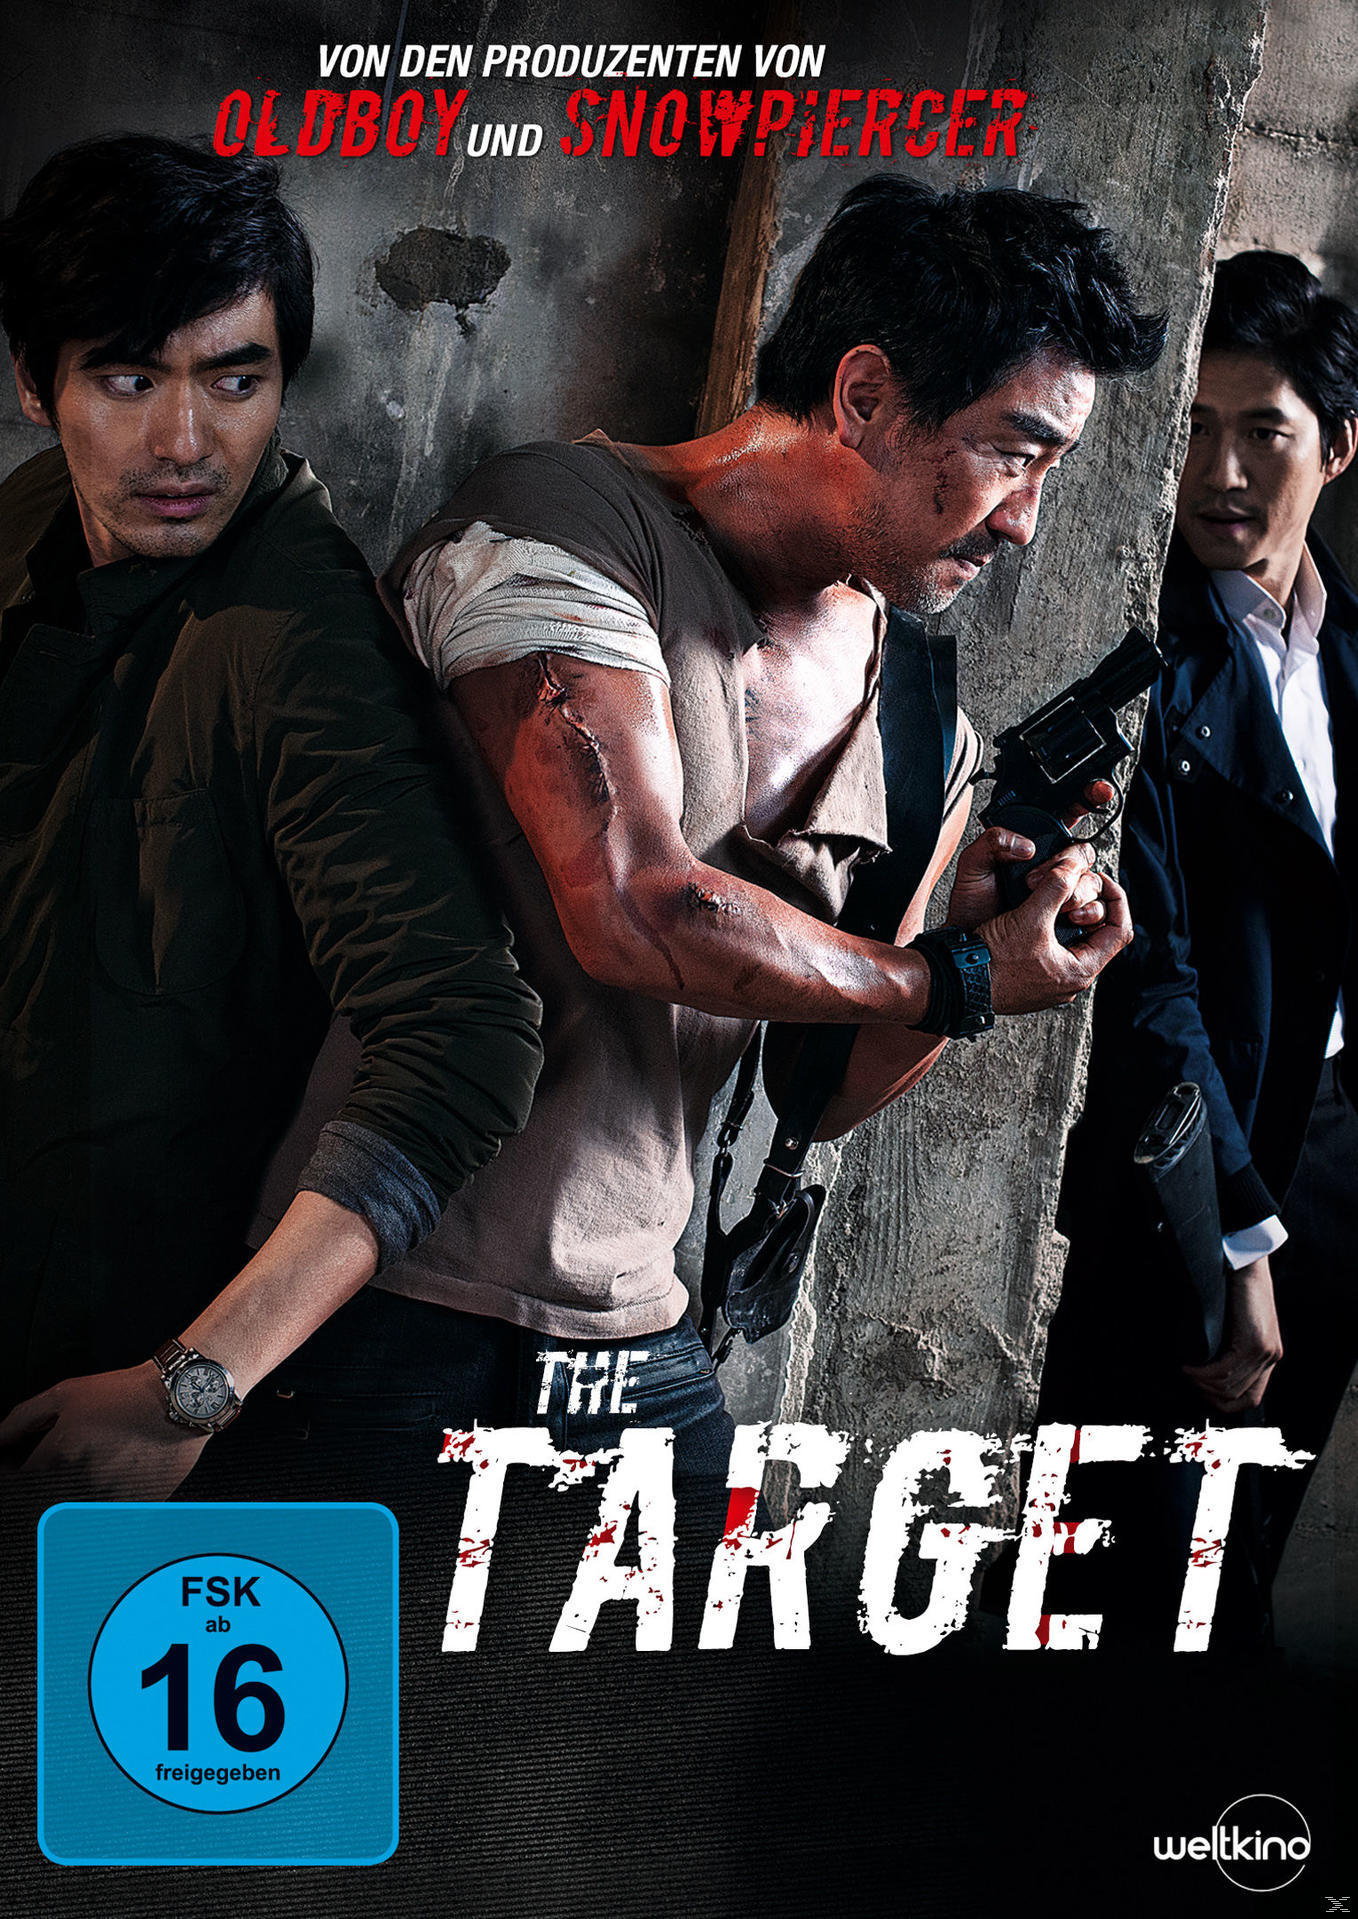 The DVD Target